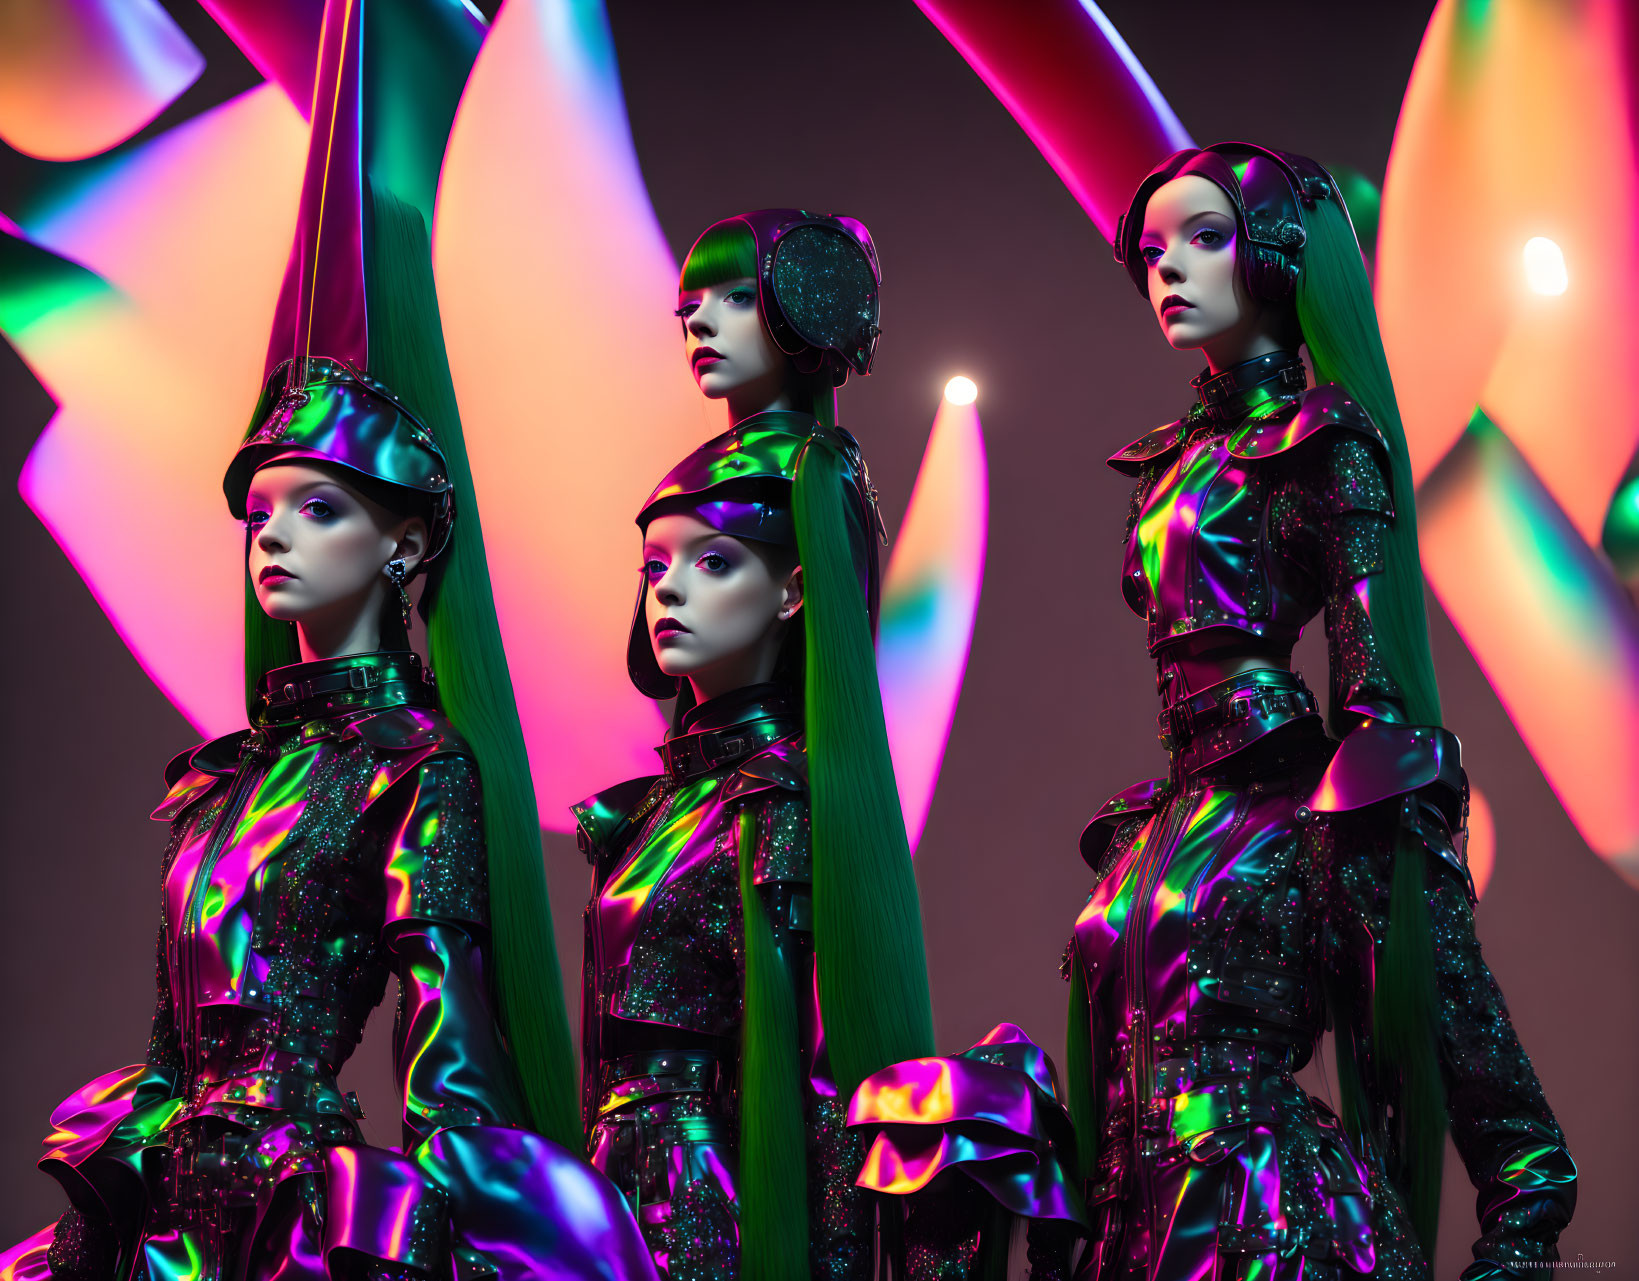 Futuristic female figures in sleek clothing with geometric headgear against vibrant neon backdrop